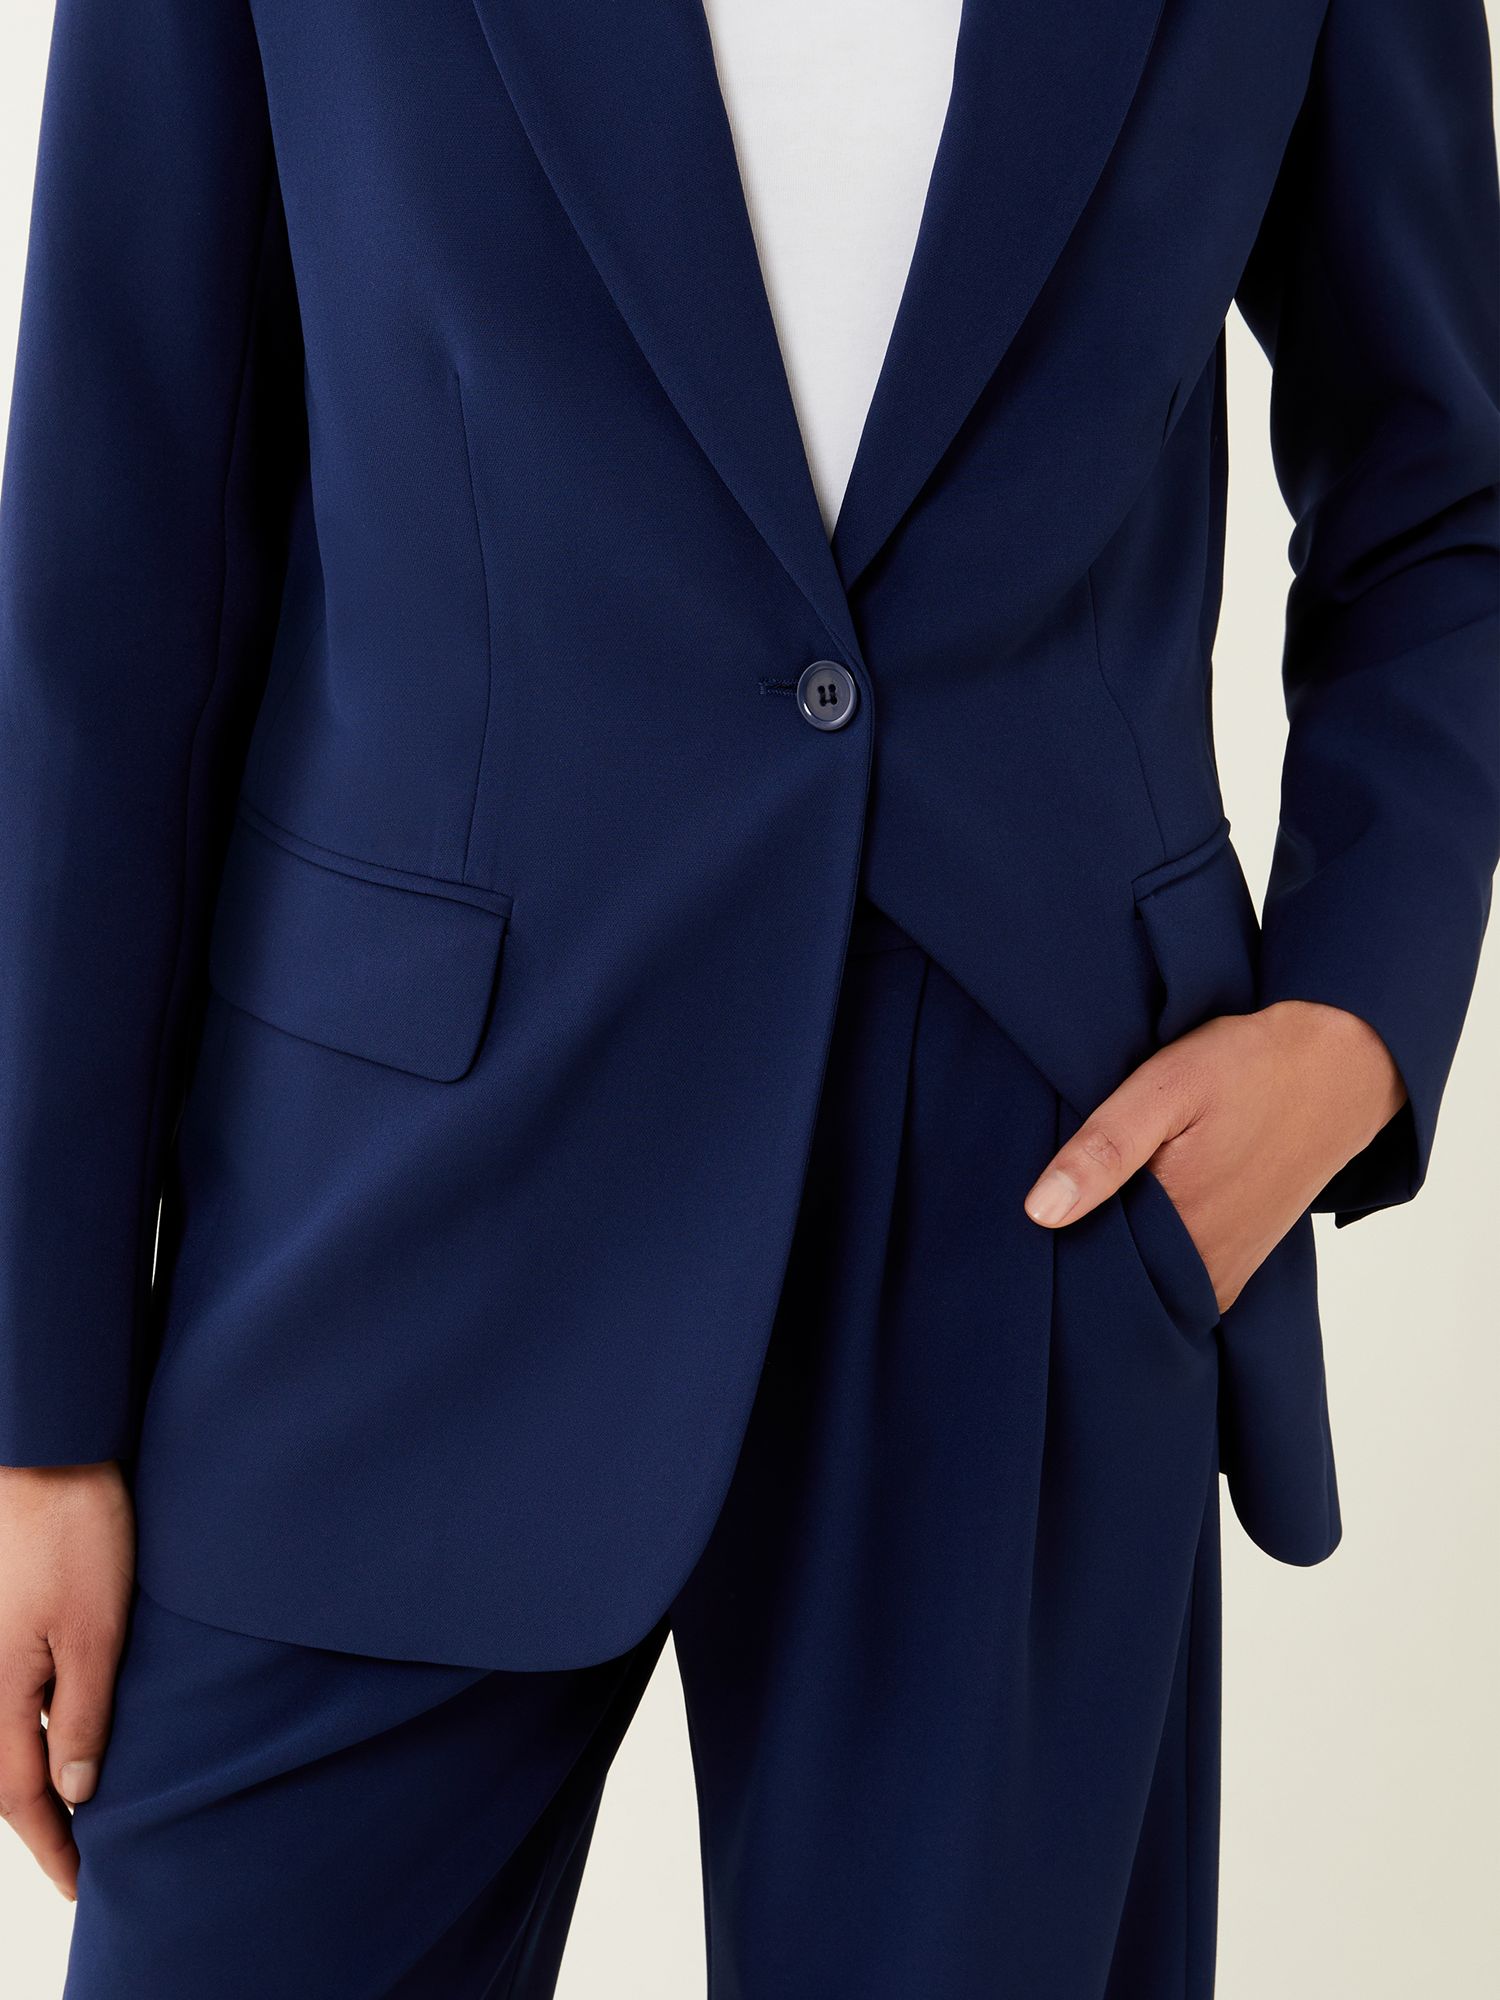 Women's Navy Blue Suit Jacket